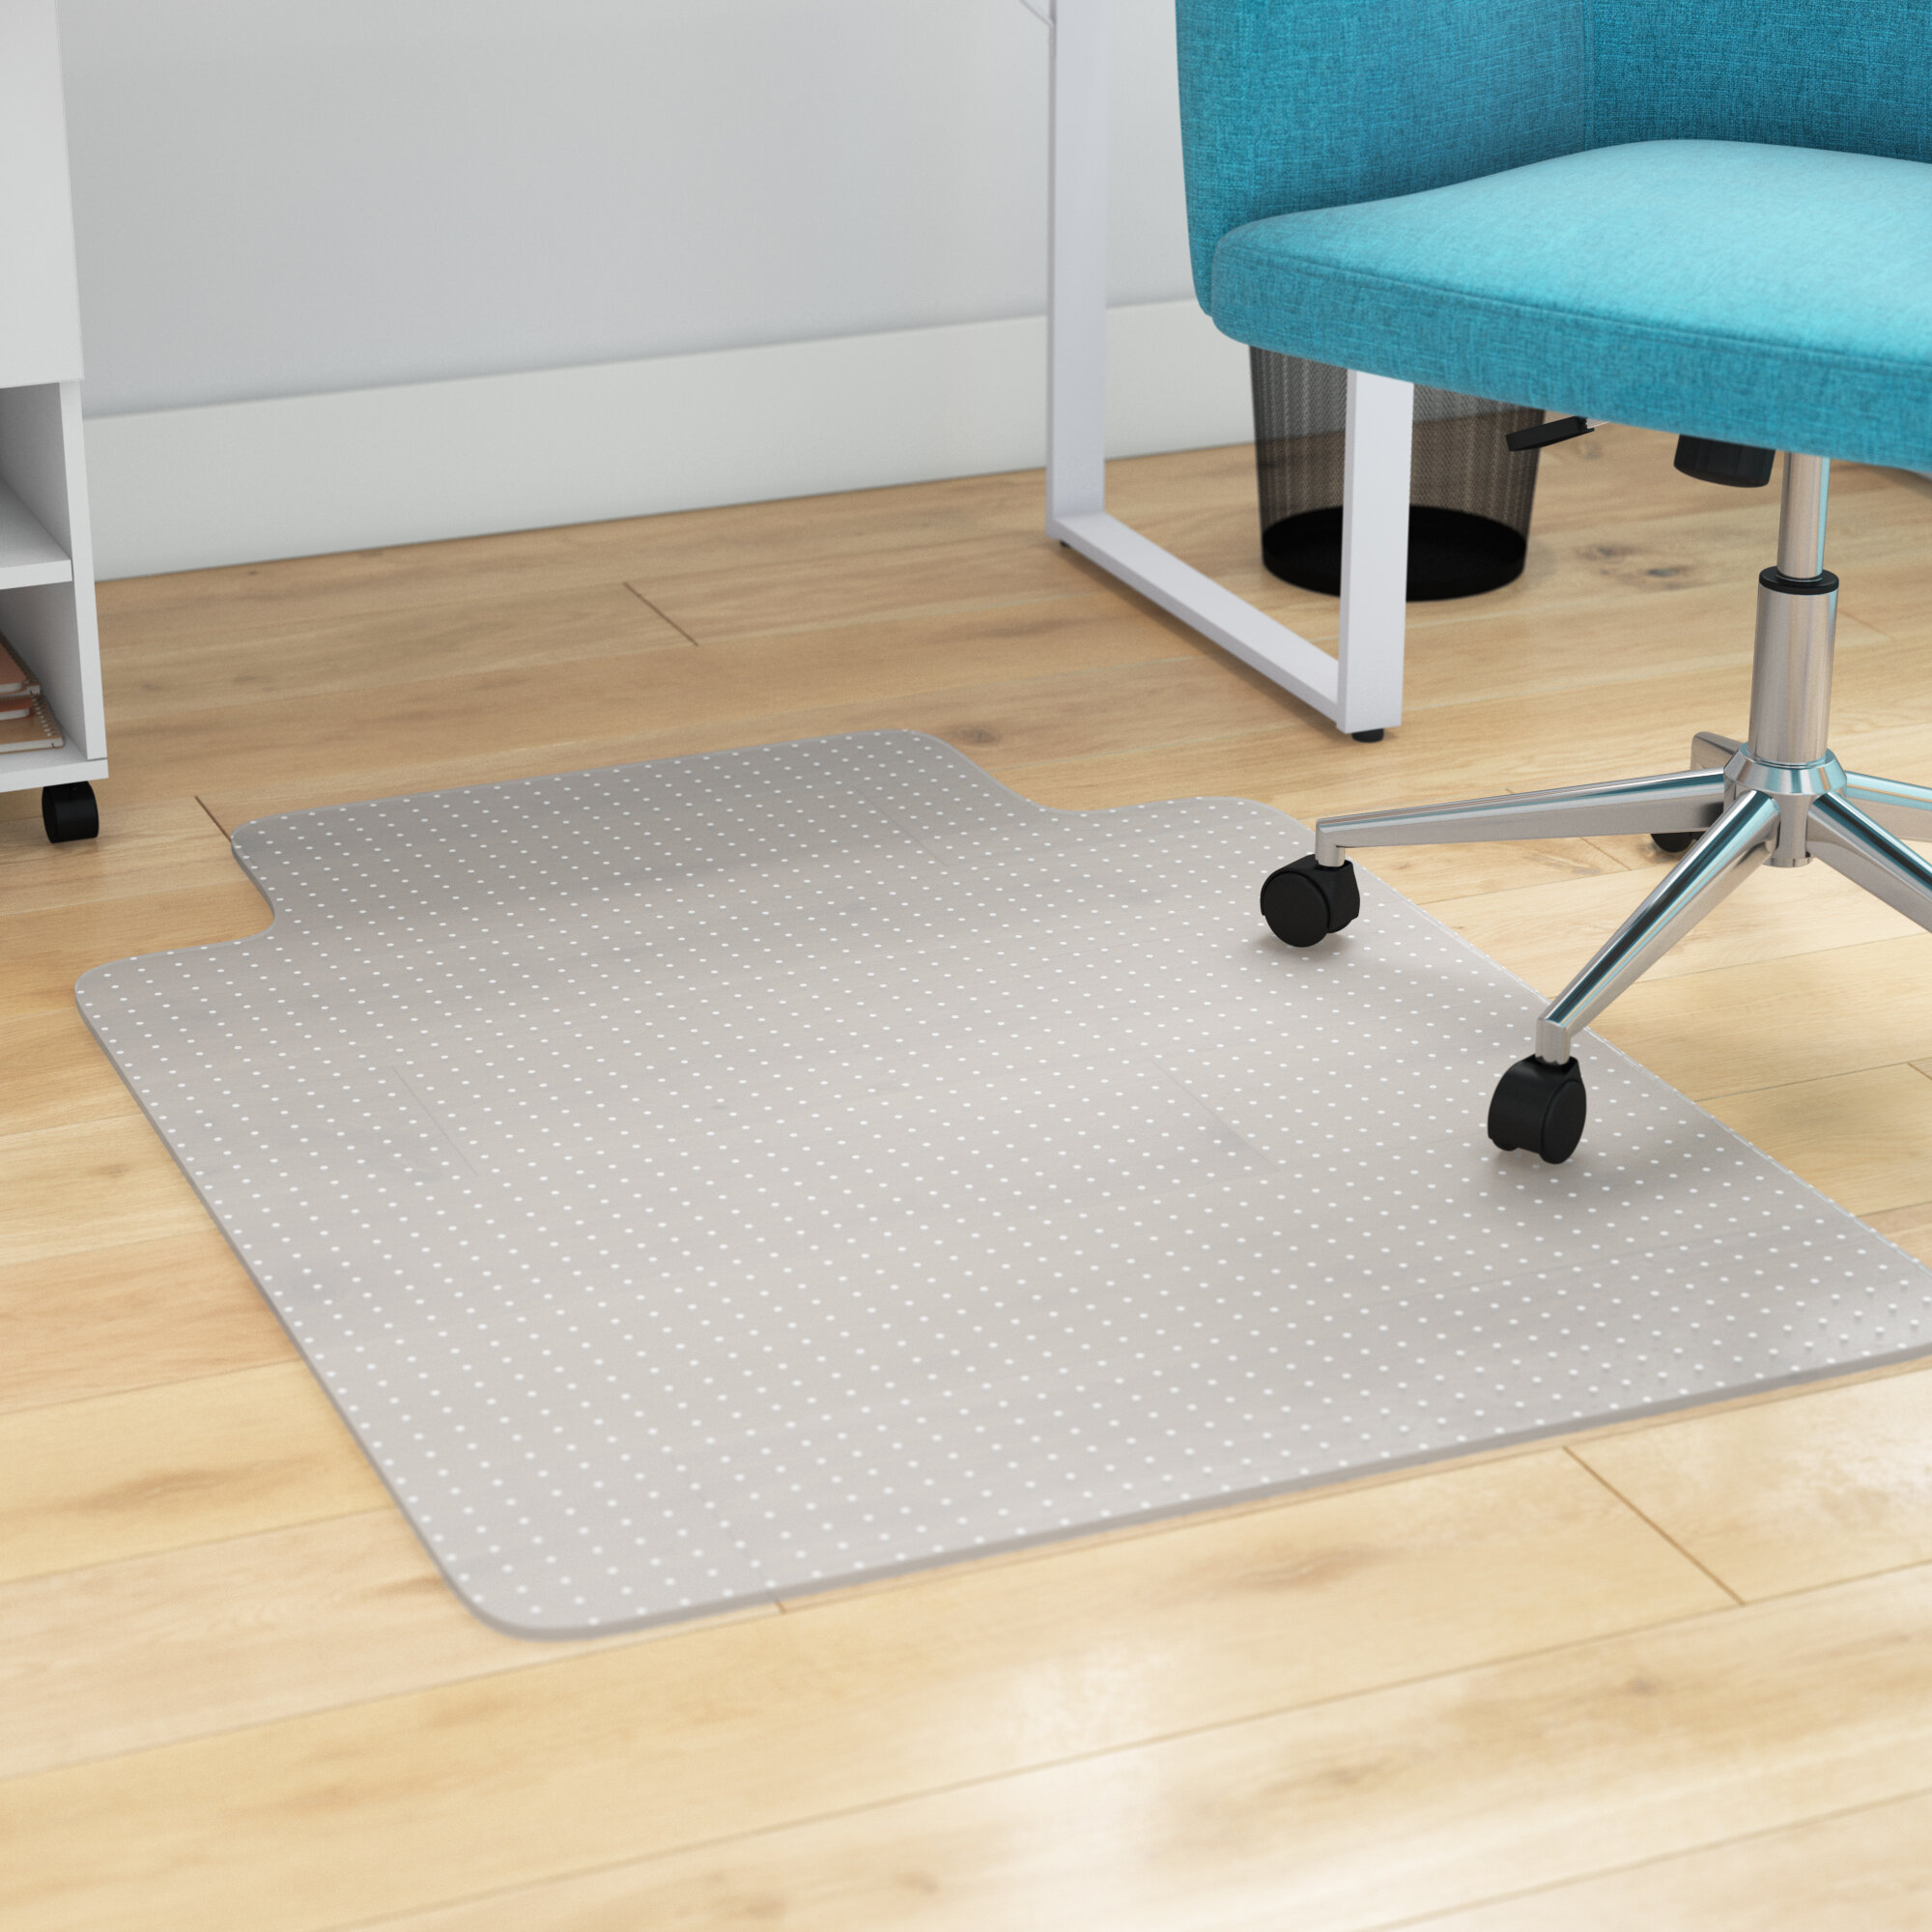 Non-Slip Floor Protector Mat Clear Mat 100x120cm etm Polycarbonate Carpet Protector Scratch-Resistant Underlay Without Studs for Short-Pile Carpets